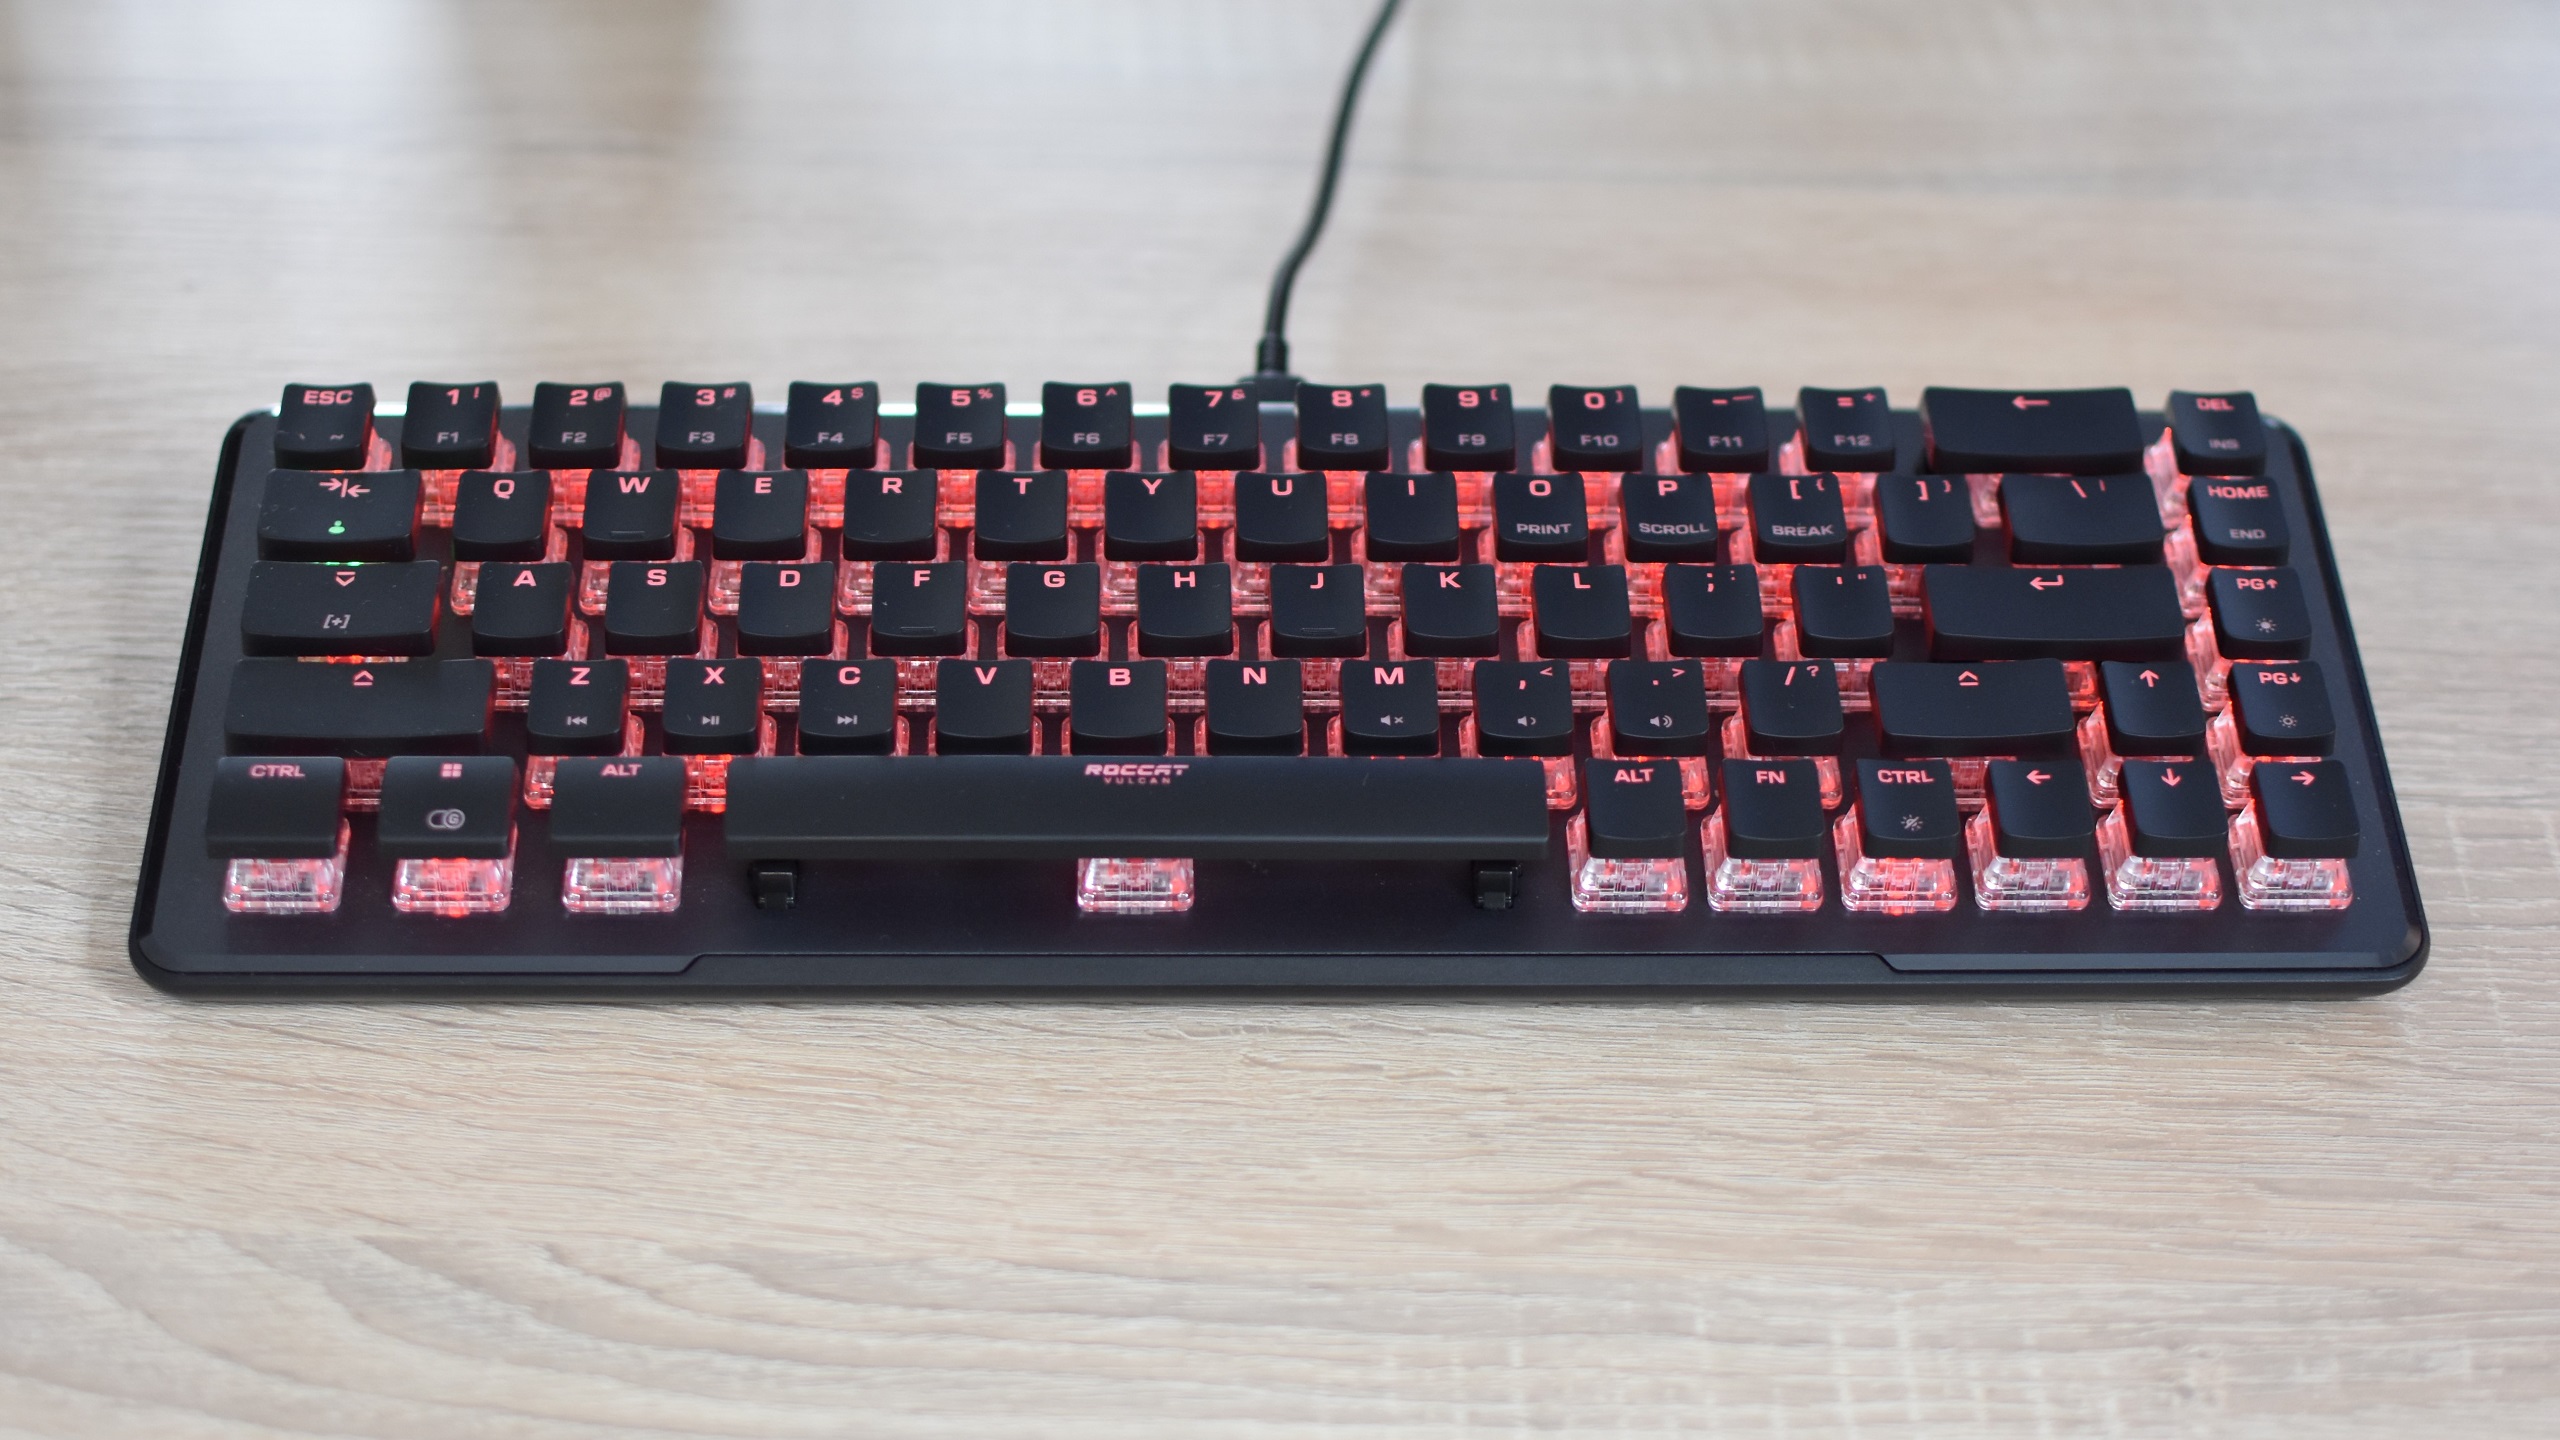 The Roccat Vulcan II Mini gaming keyboard on a desk.